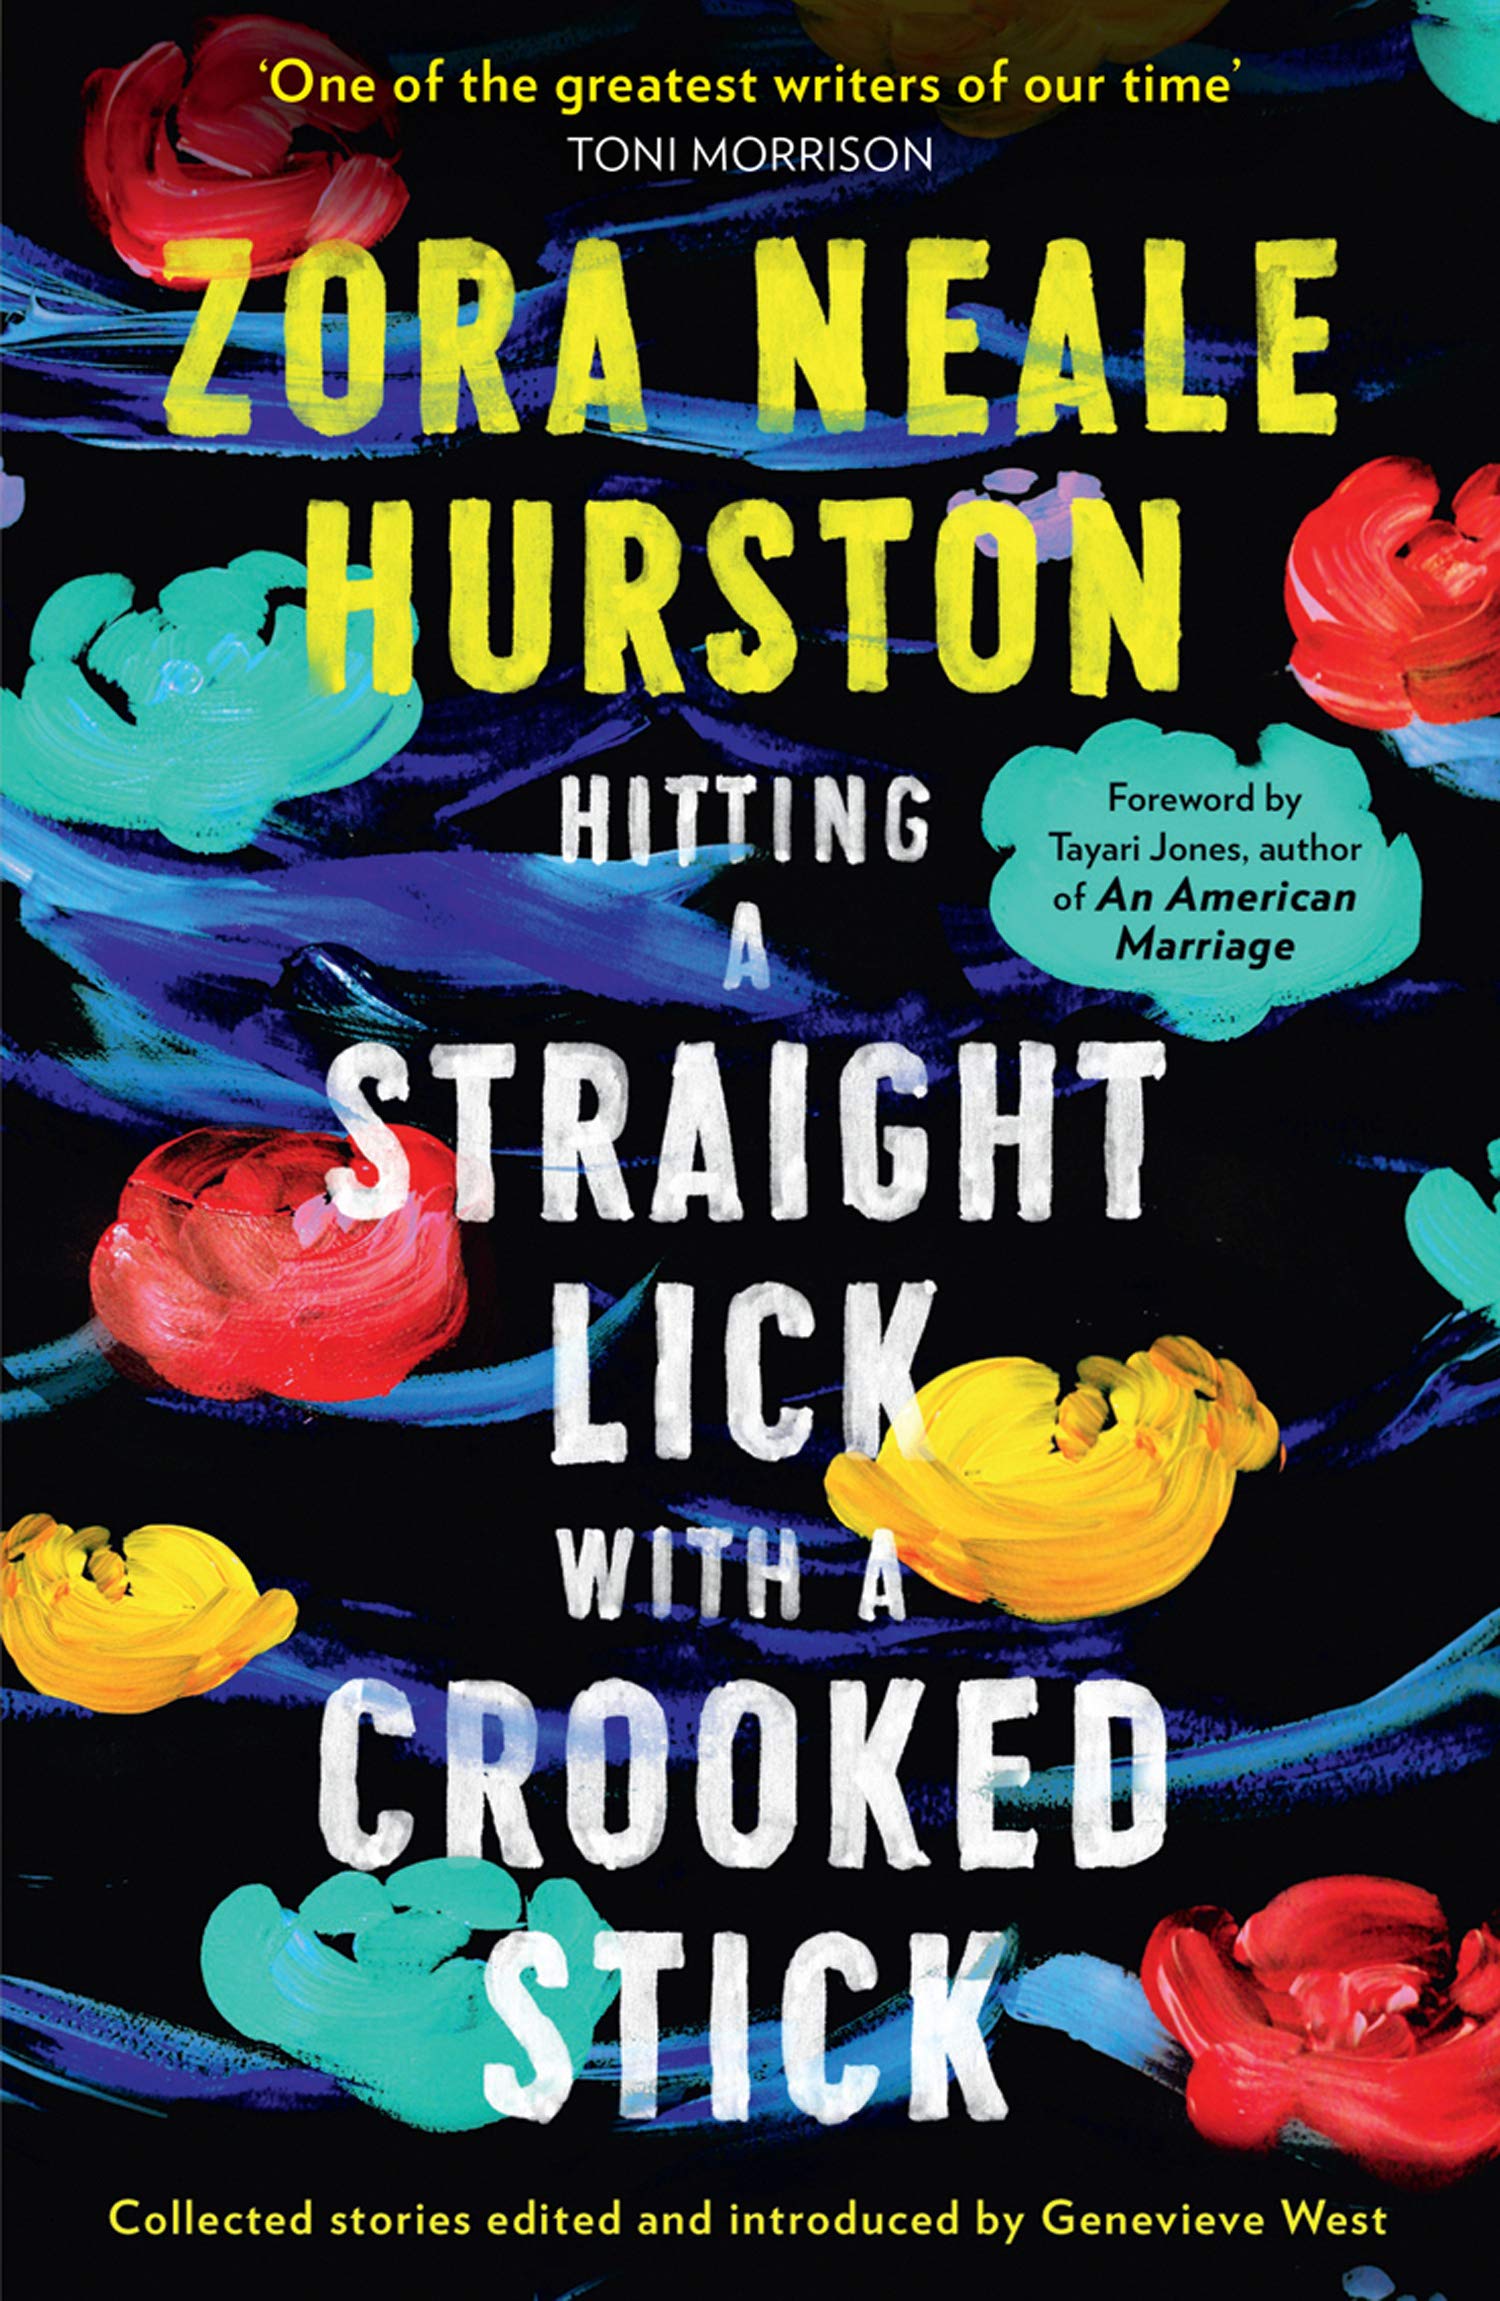 Hitting a Straight Lick with a Crooked Stick | Zora Neale Hurston